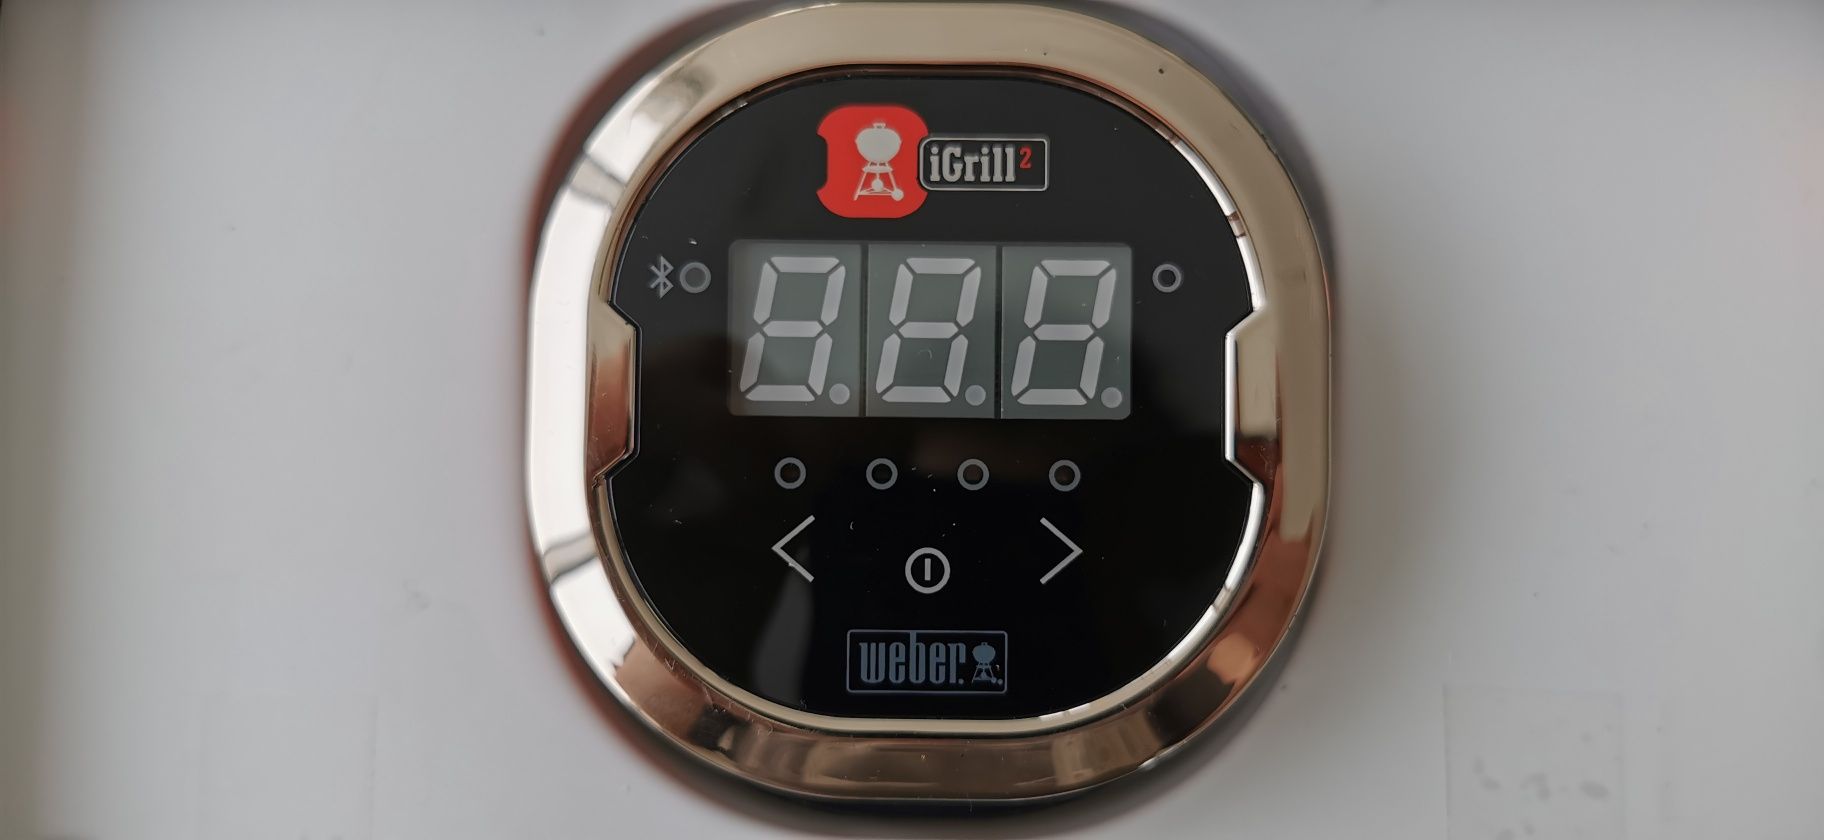 Weber Igrill 2 mini Bluetooth Термометр электронный для гриля мяса